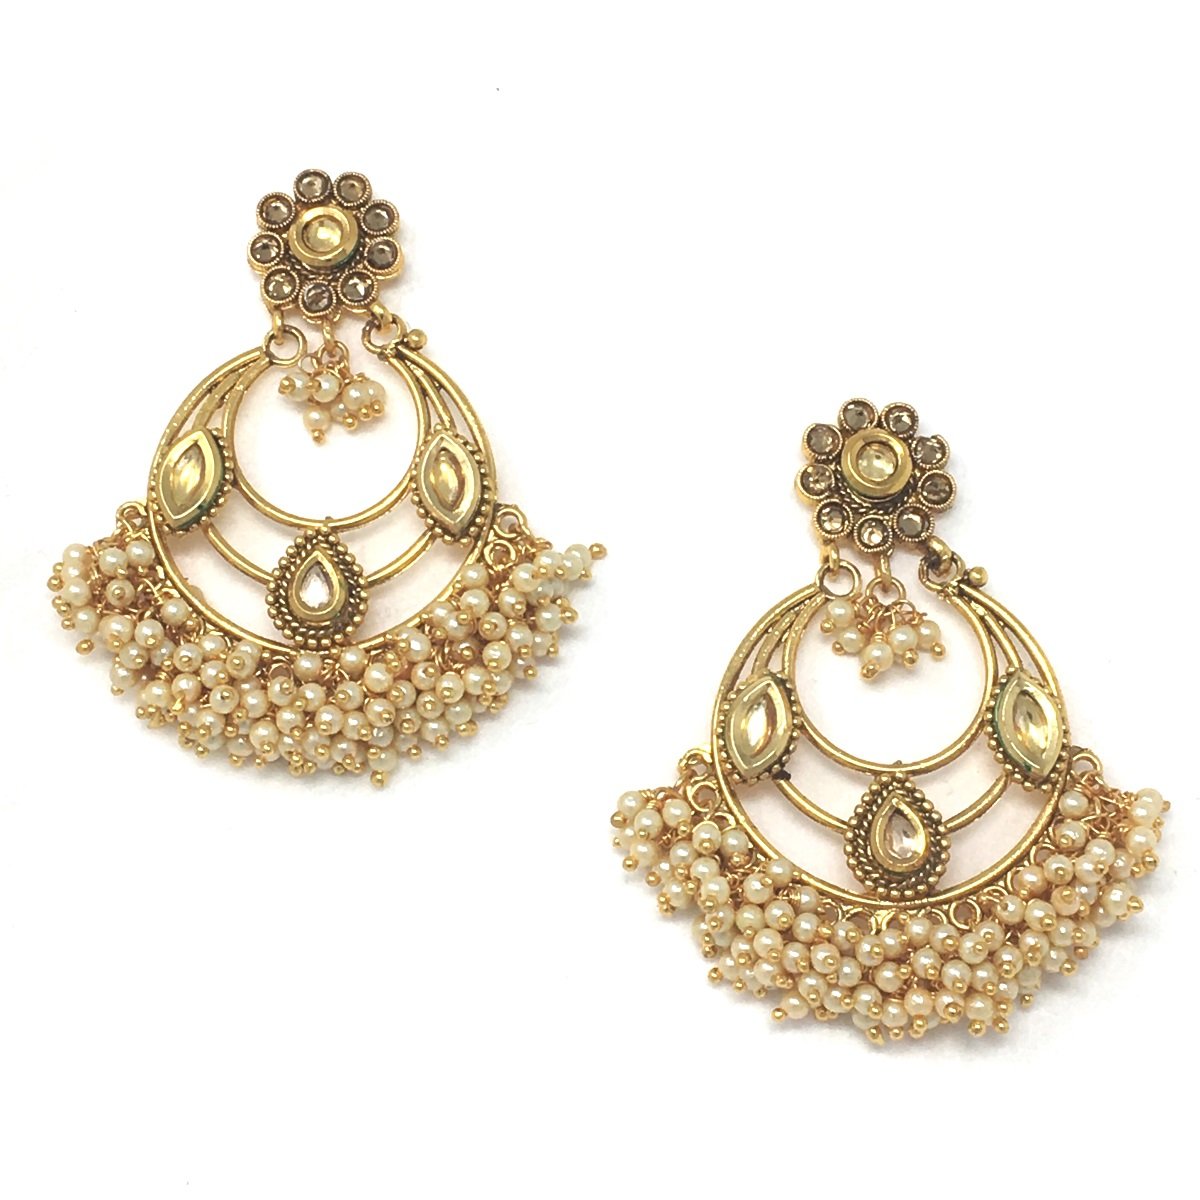 Gold Kundan Chandbali Earrings with Multiple Pearl Drops